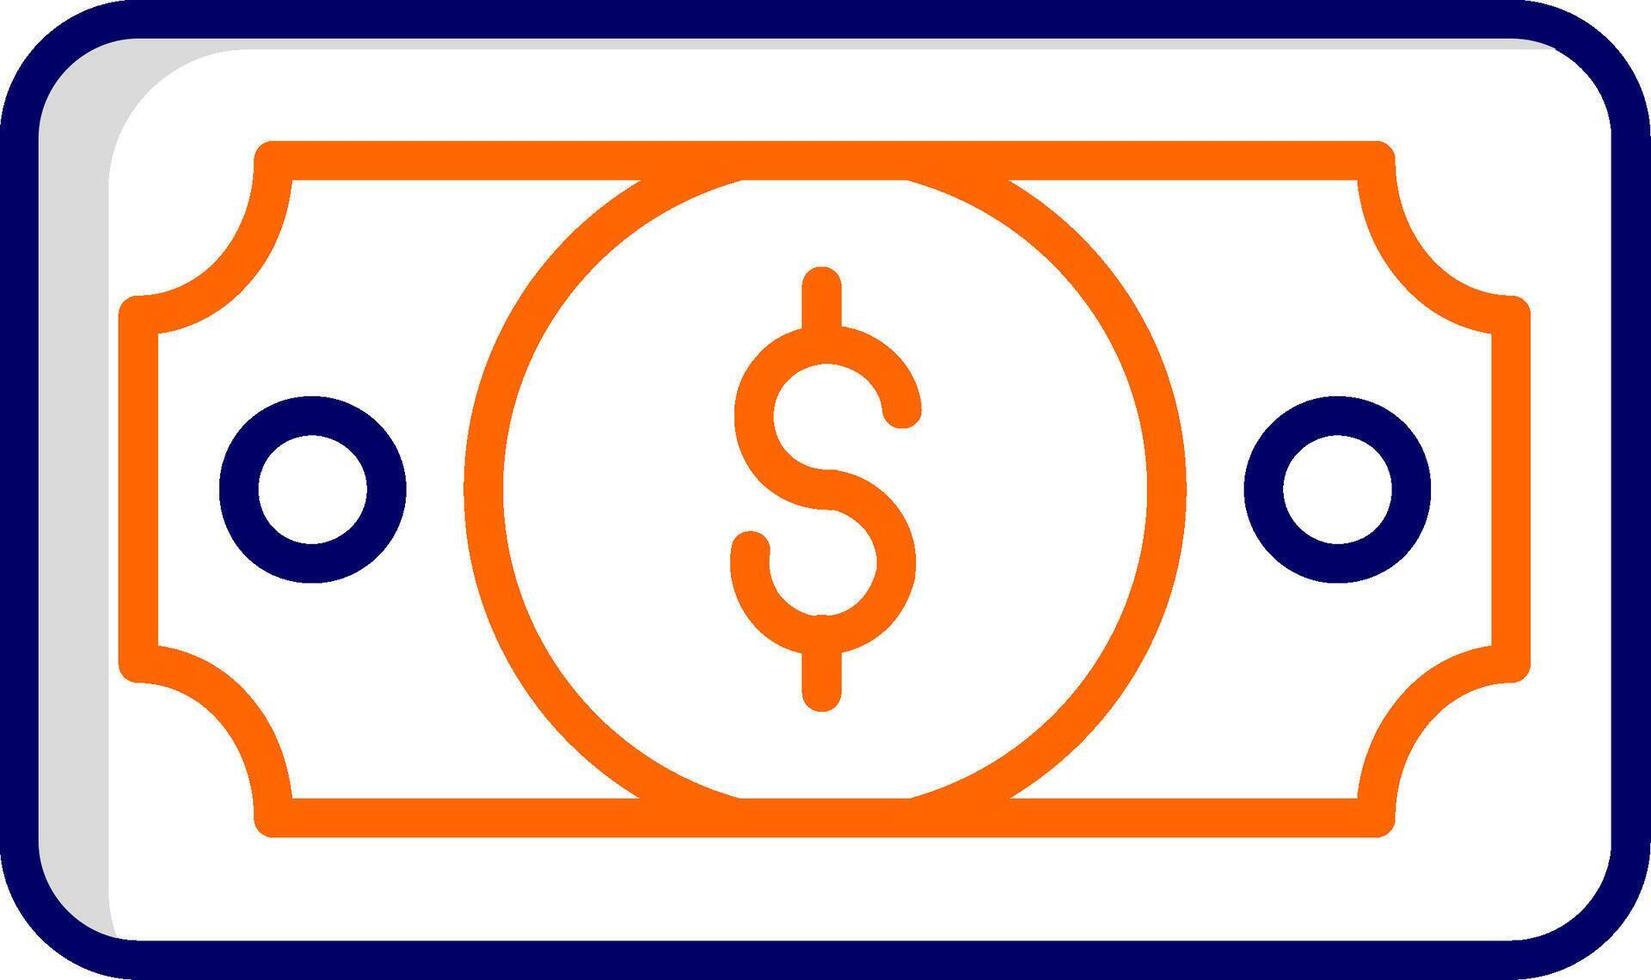 Dollar Vector Icon